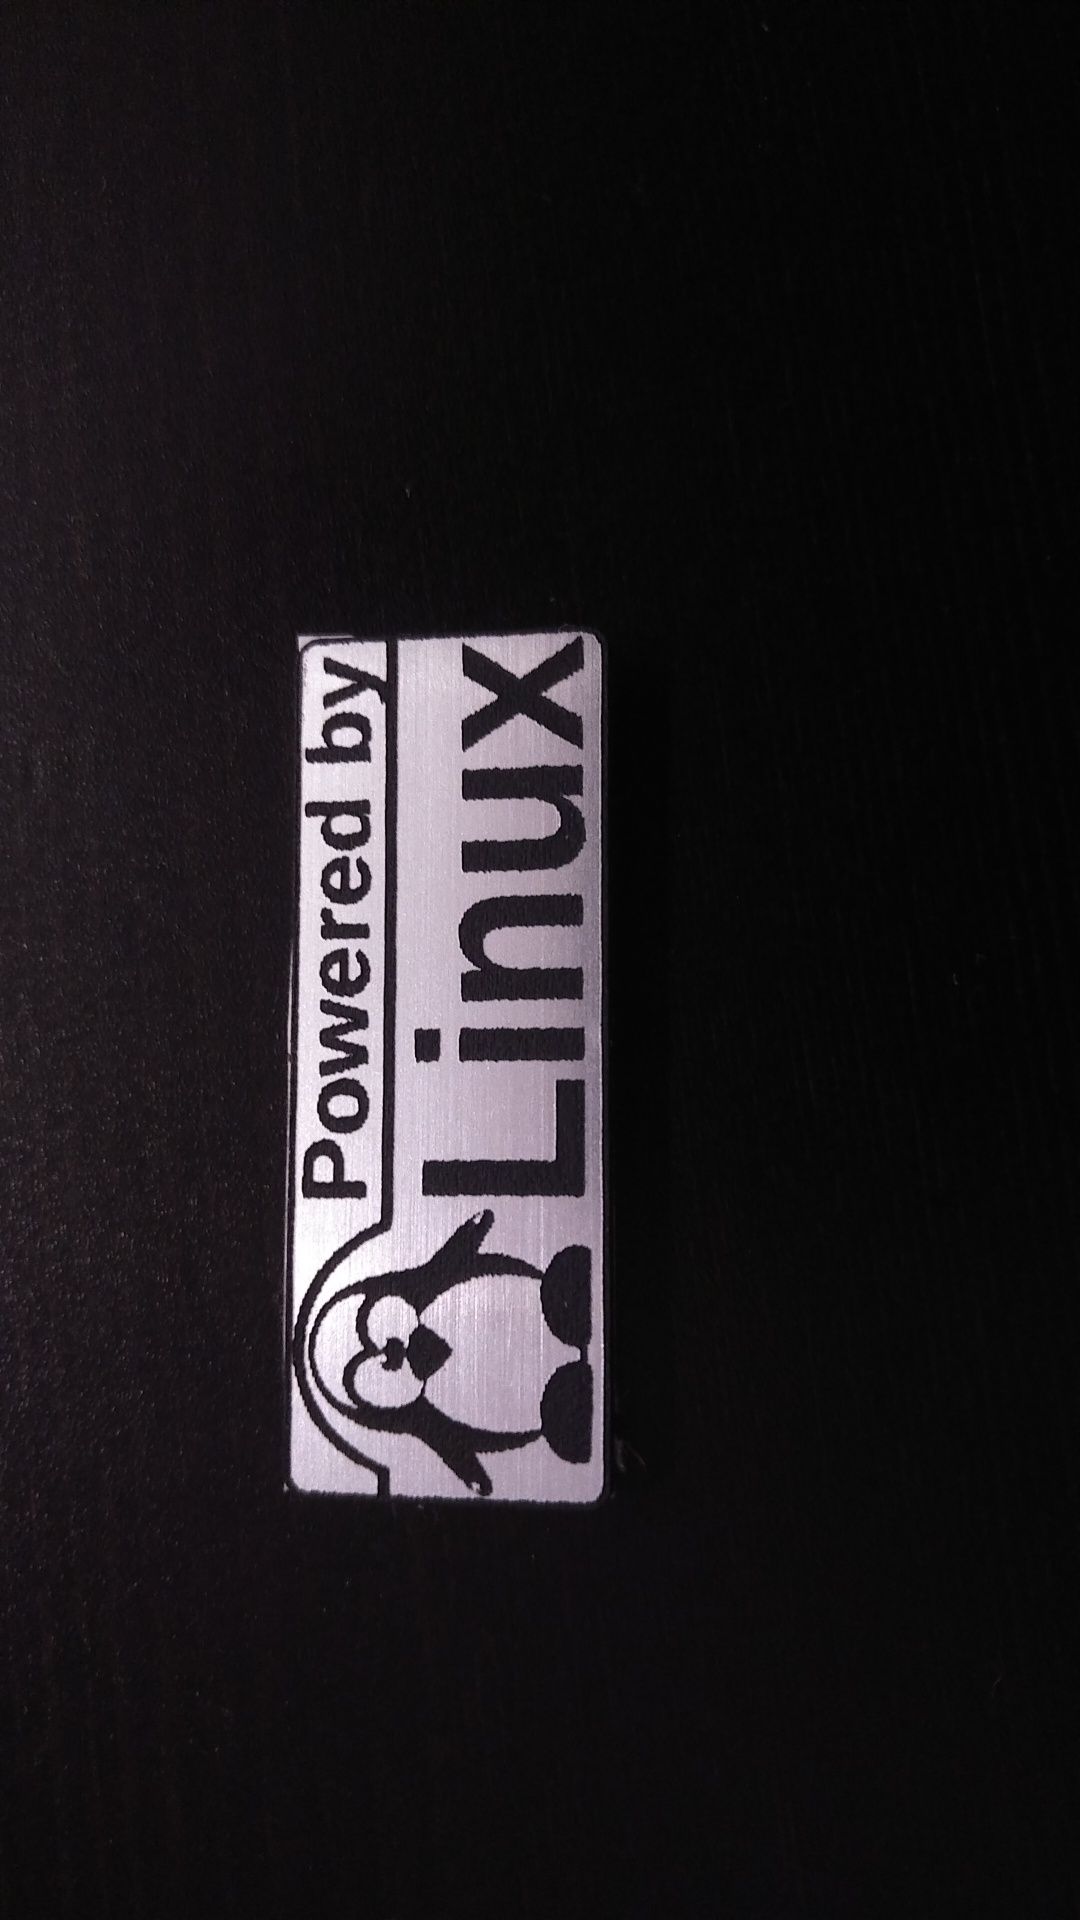 3 loga/emblematy: JBL, Dual, Linux